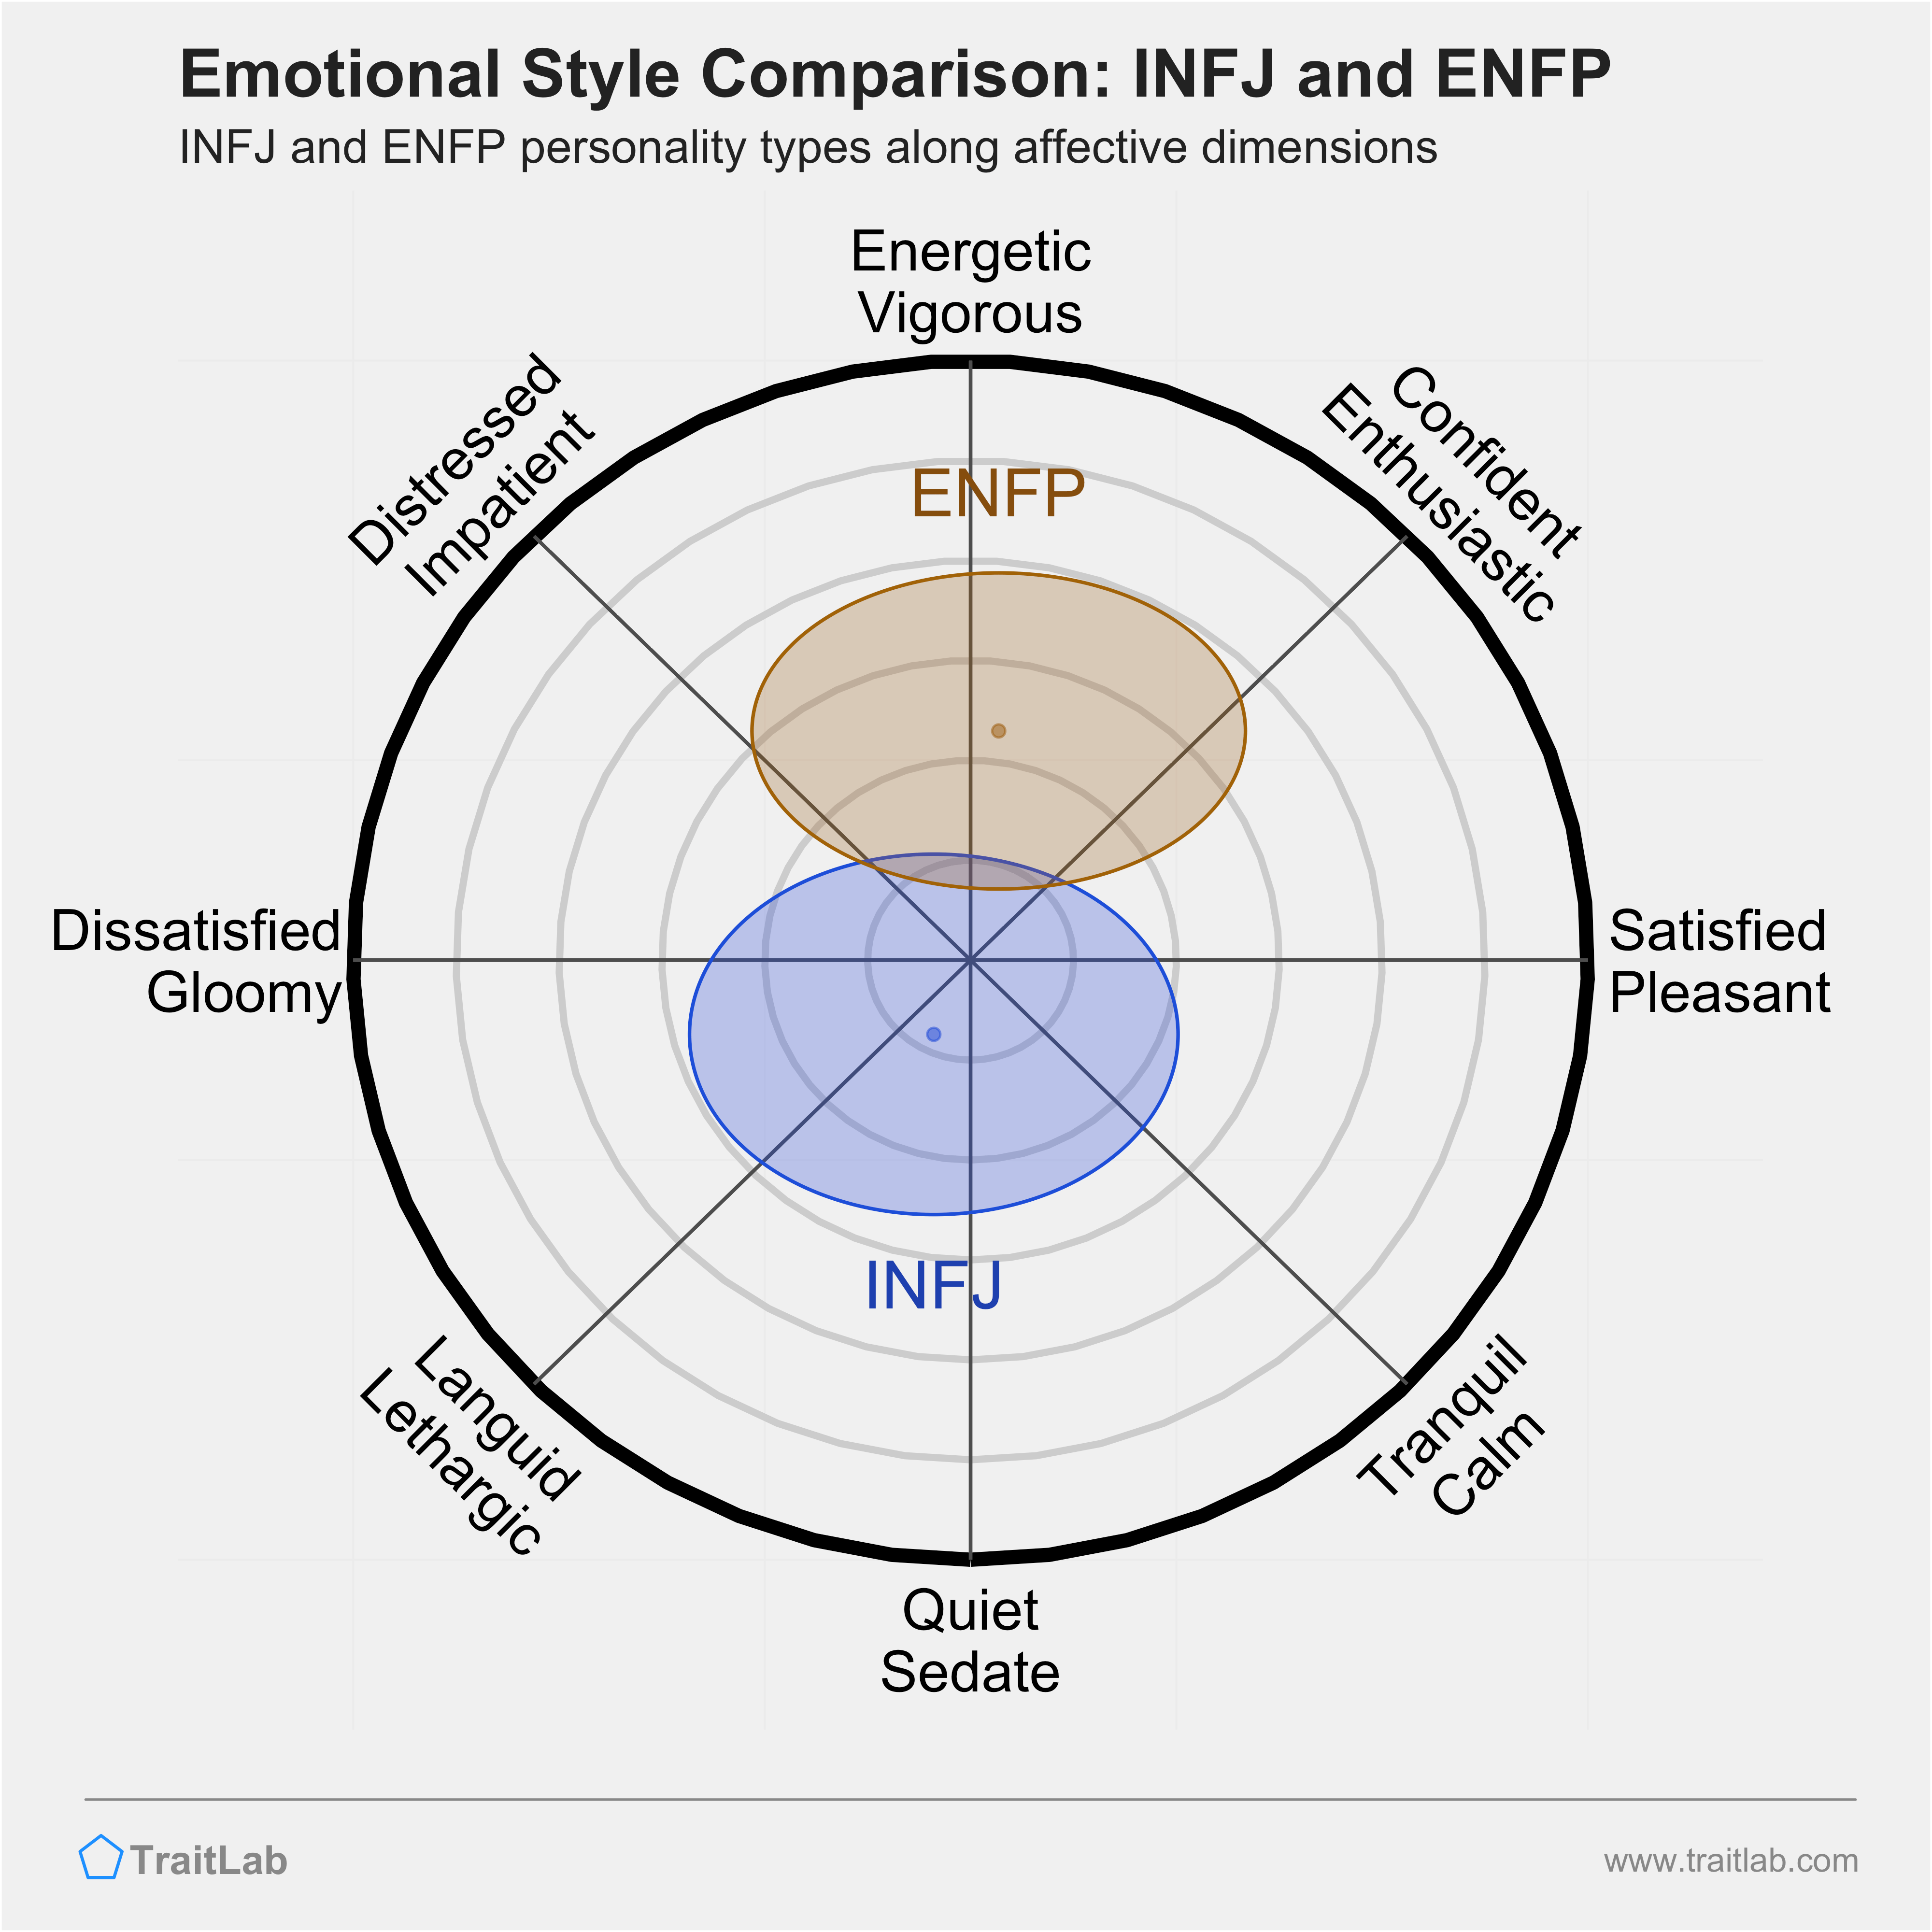 INFJ and ENFP comparison across emotional (affective) dimensions